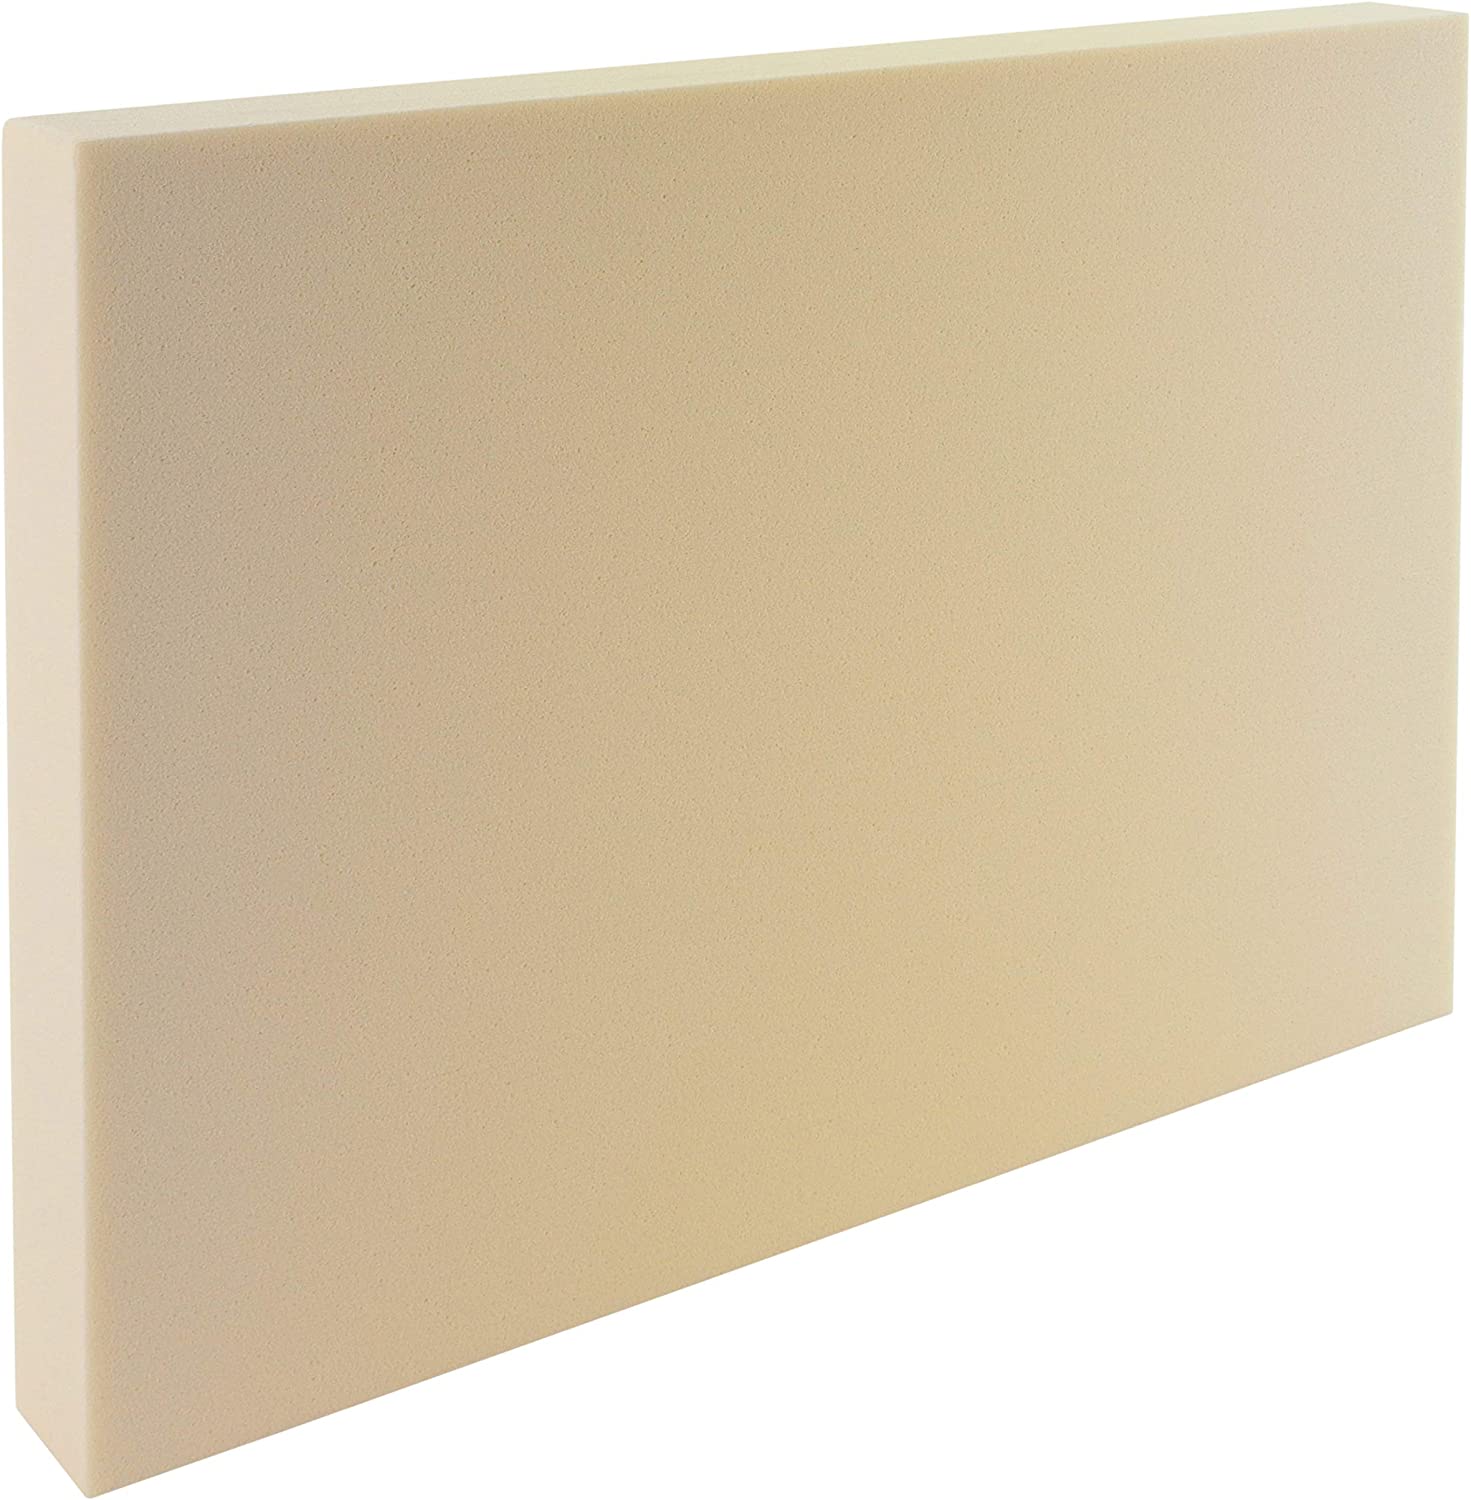 Sculpture Block – Sculpture Canvas – Polyurethane Foam Board – 12 x 9 x 1 inches